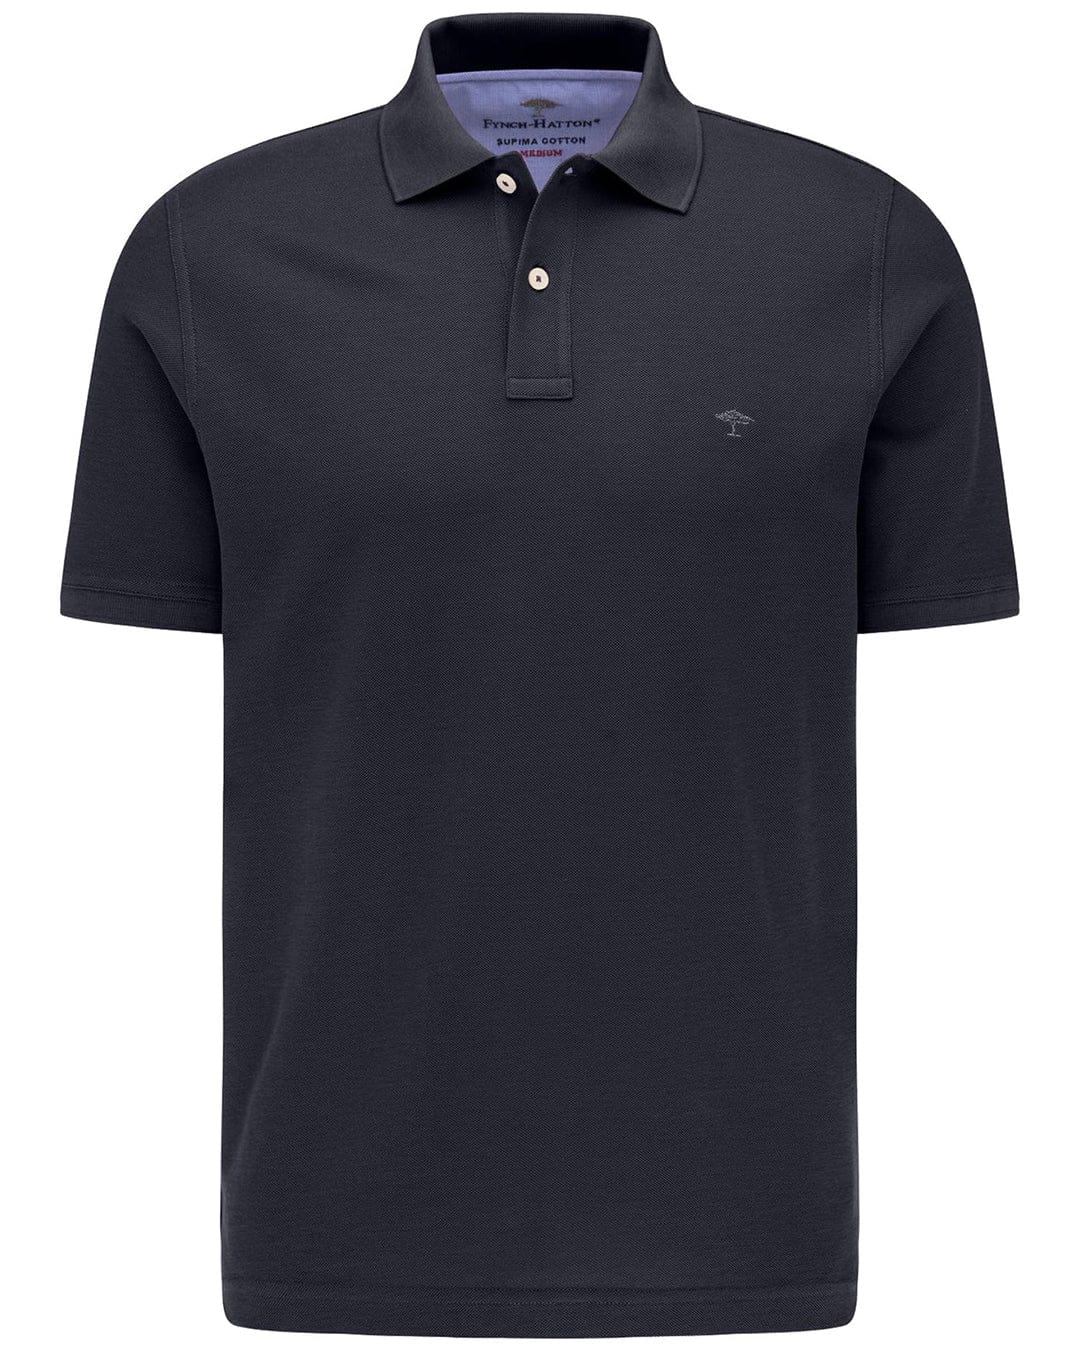 Fynch-Hatton Polo Shirts Fynch-Hatton Classic Supima Cotton Navy Polo Shirt